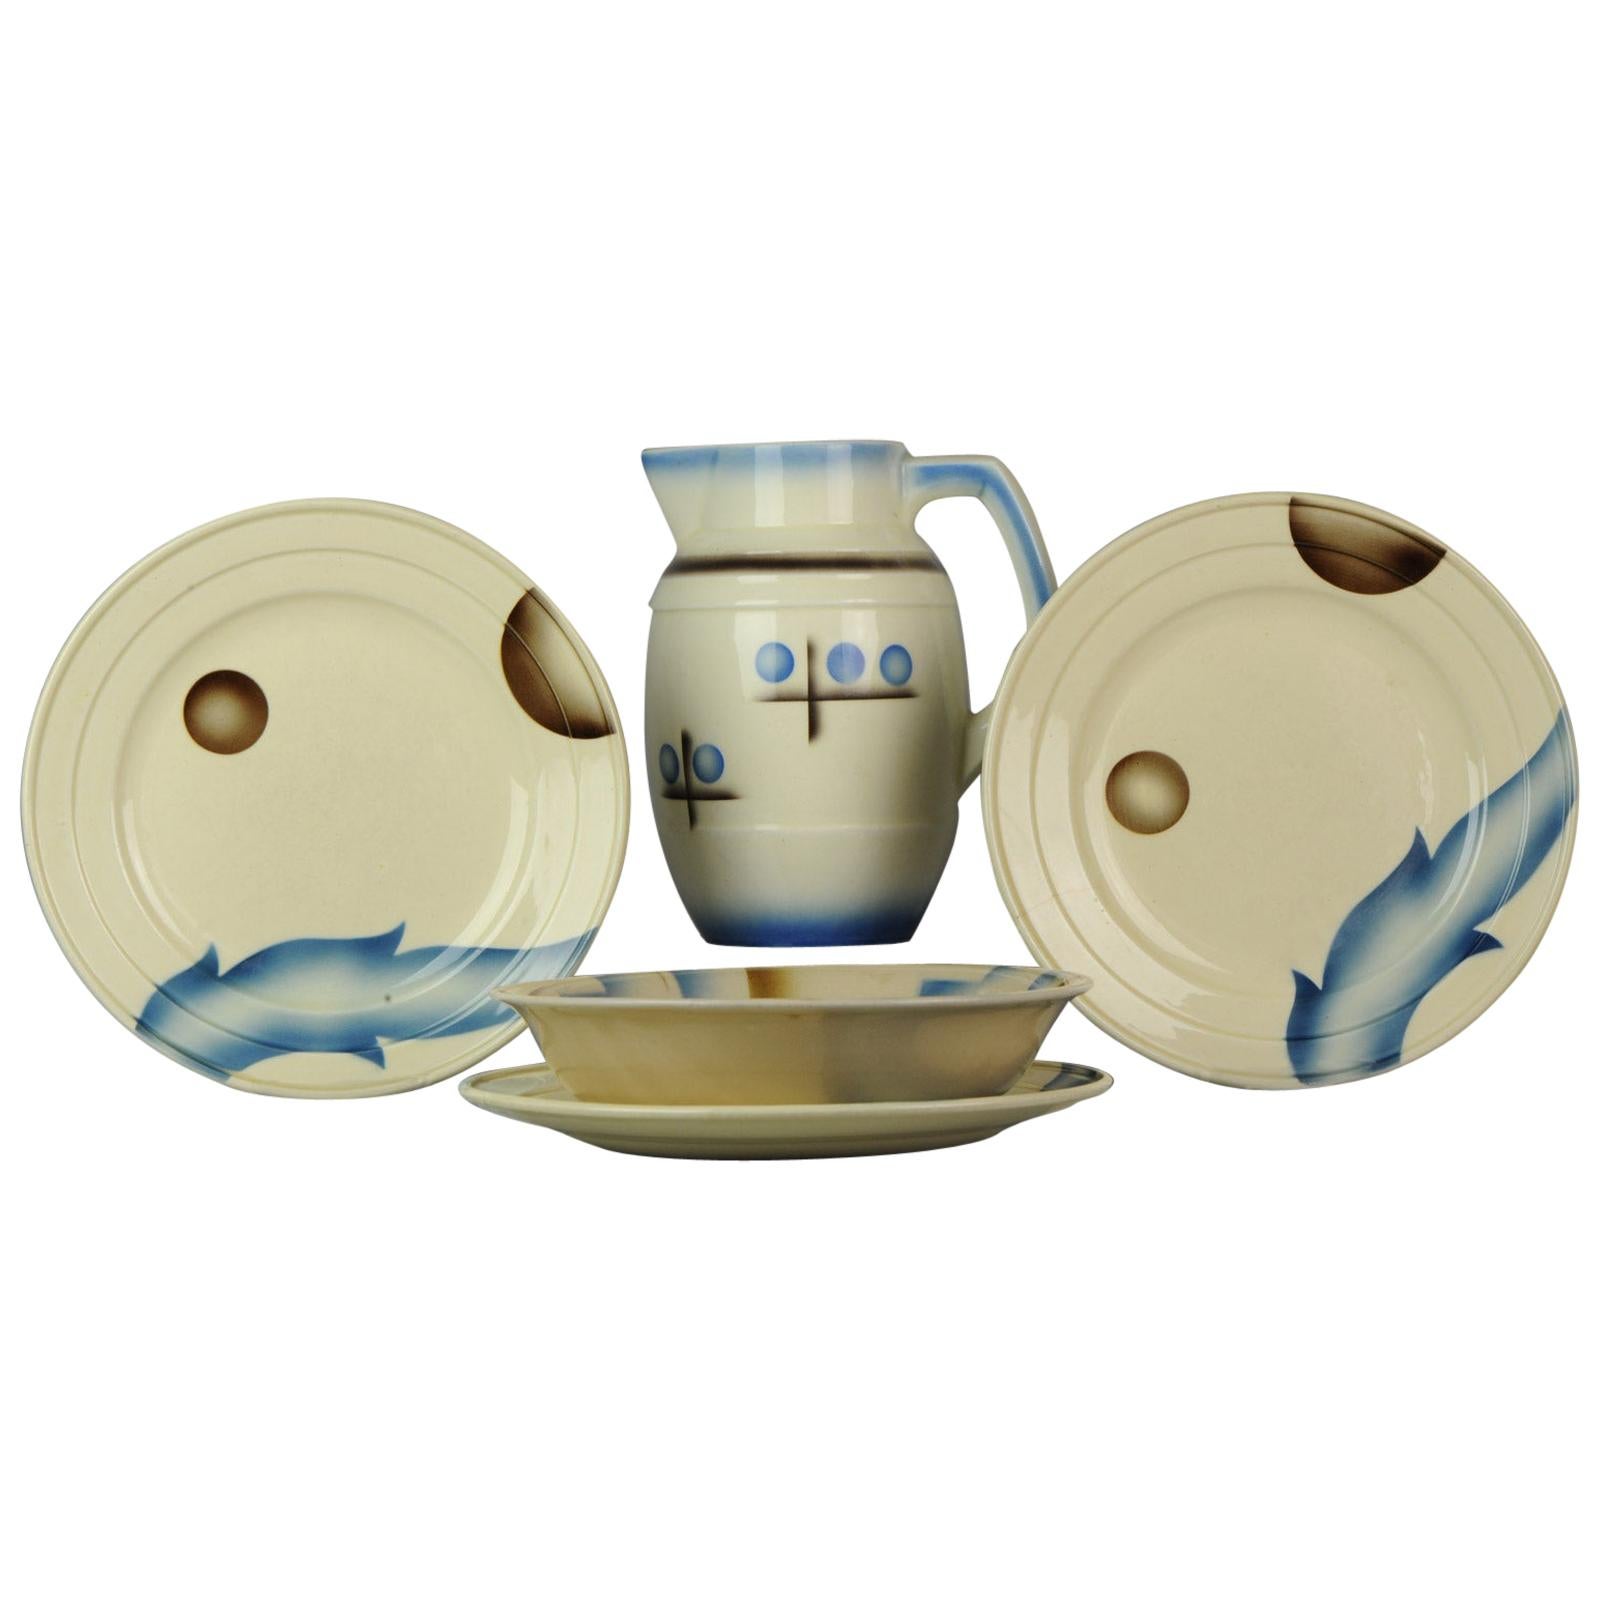 Set of Antique / Vintage German Art Deco Butter and Plates, 1920-1930